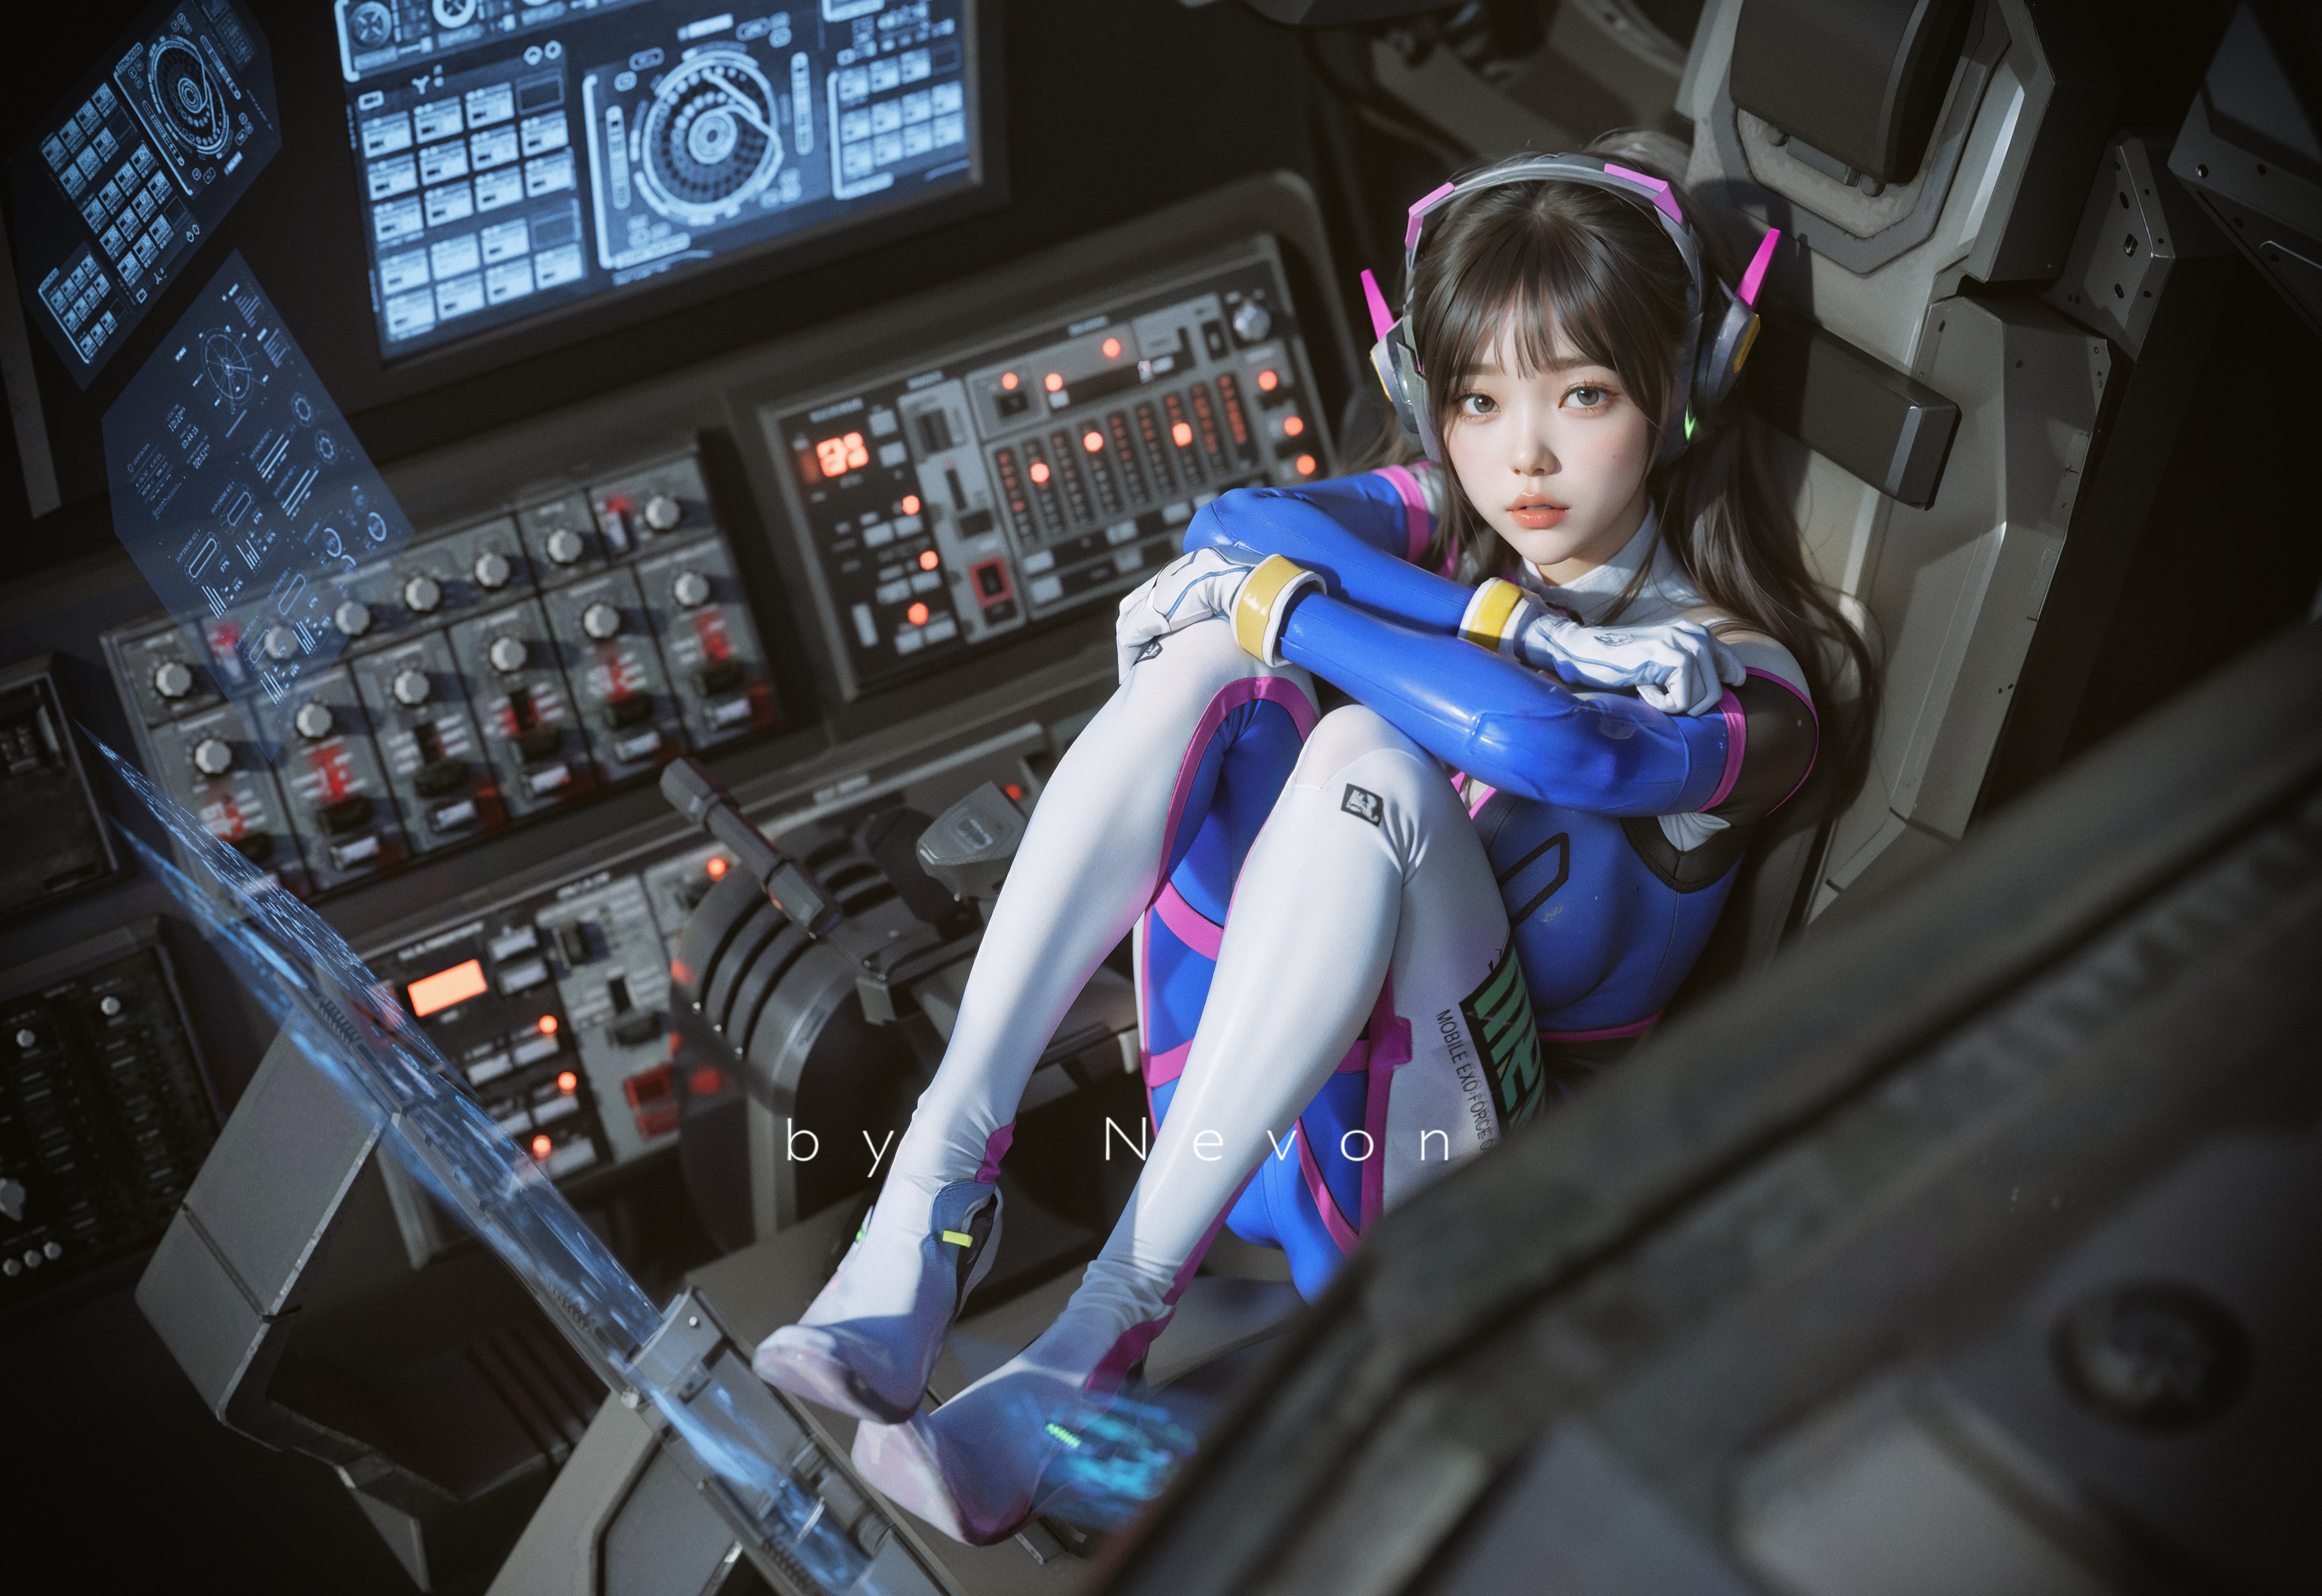 General 4000x2750 digital art CGI women science fiction futuristic sitting D.Va (Overwatch) dark hair headsets Asian cosplay Overwatch Nevon